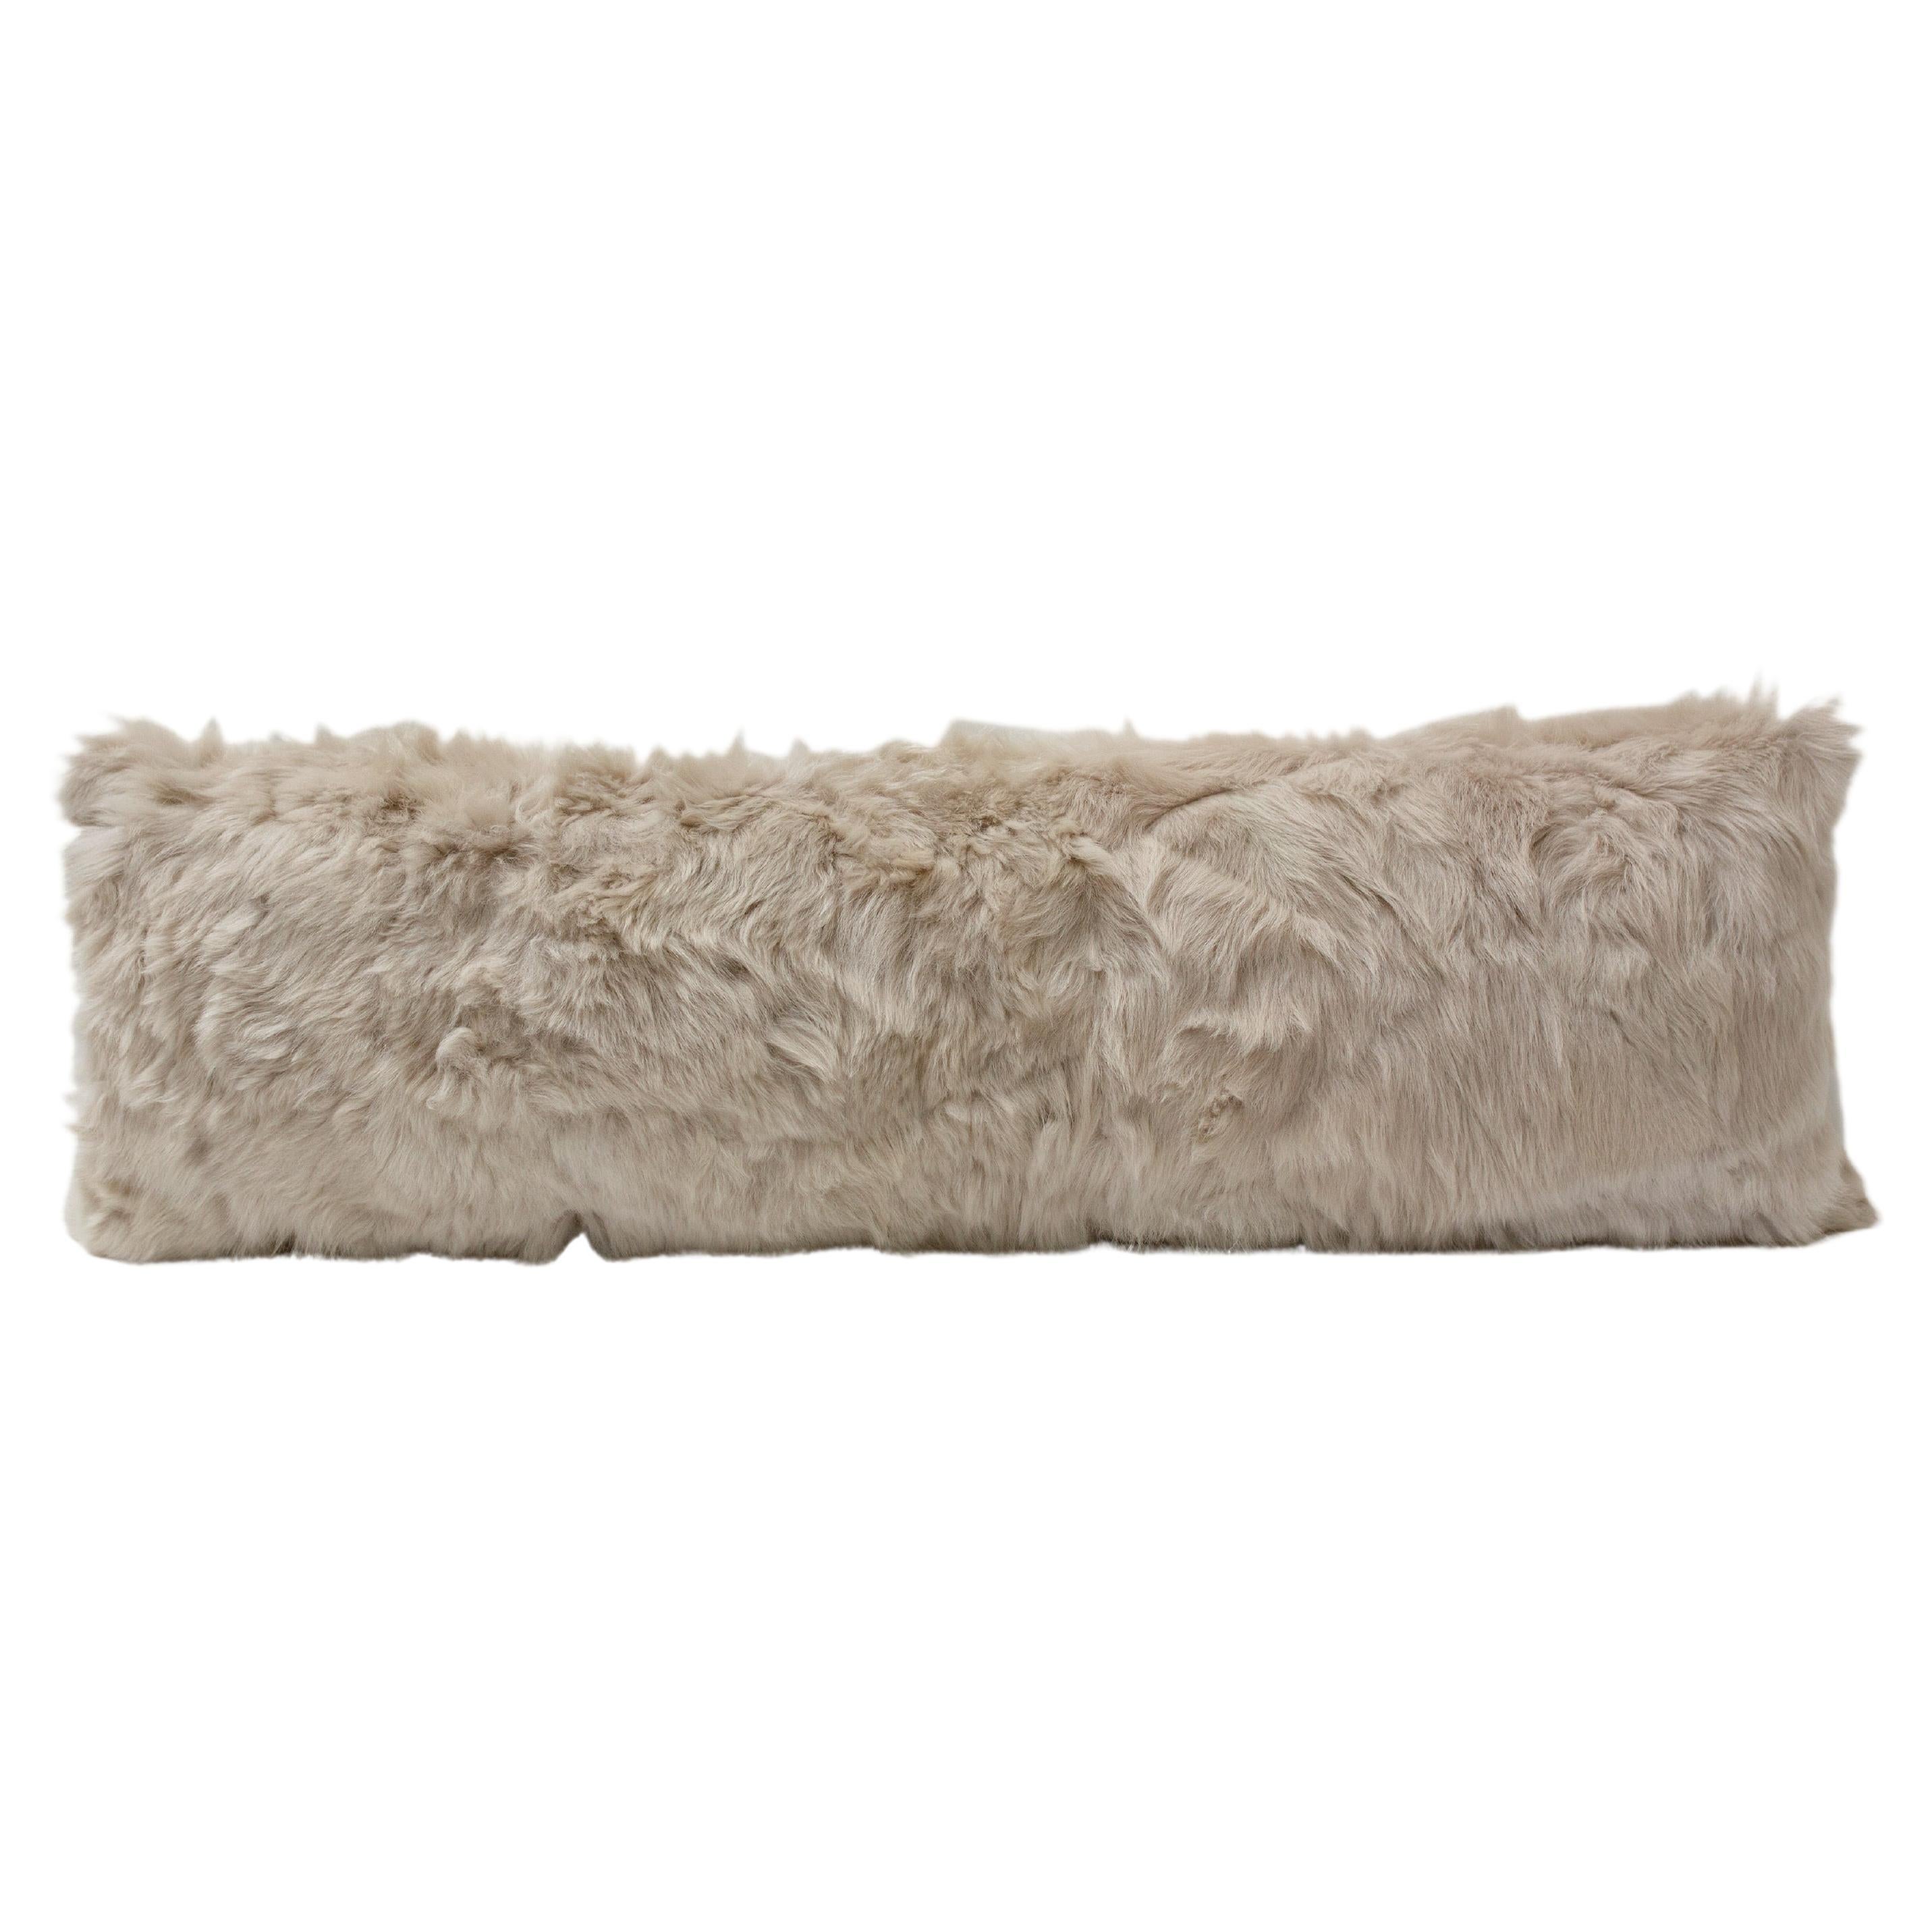 Real Fur Body Pillow in Bone by Jg Switzer For Sale